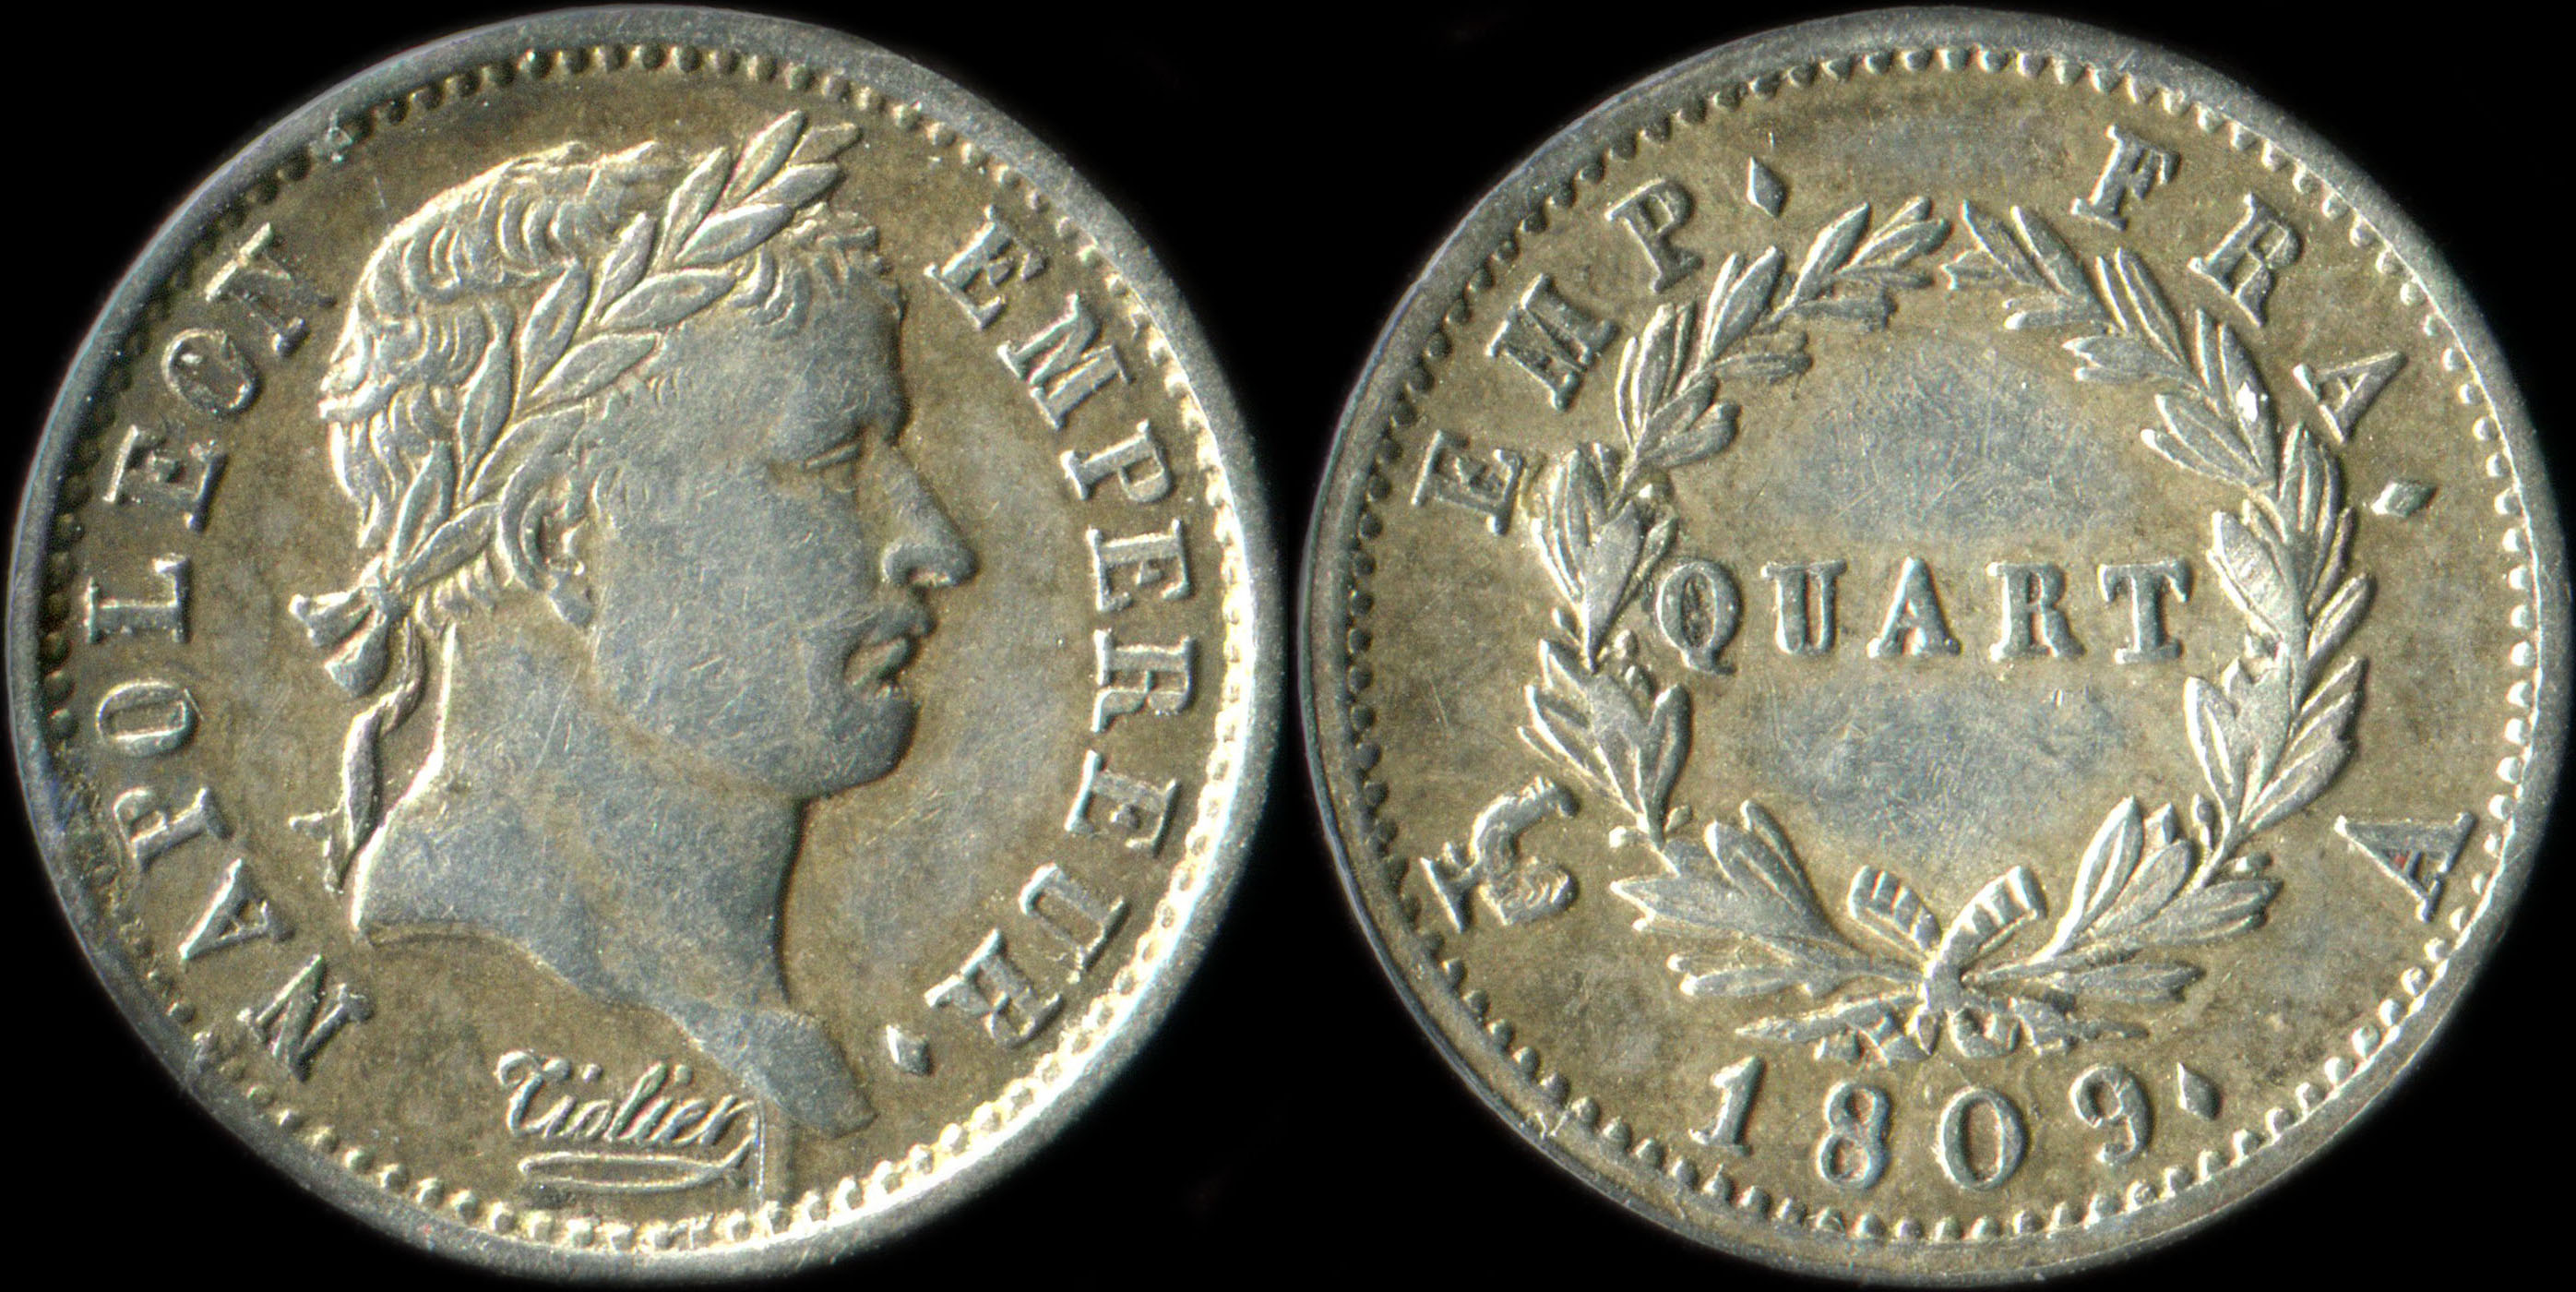 Pice de ¼ franc Napolon Empereur revers Emp. Fra. 1809A